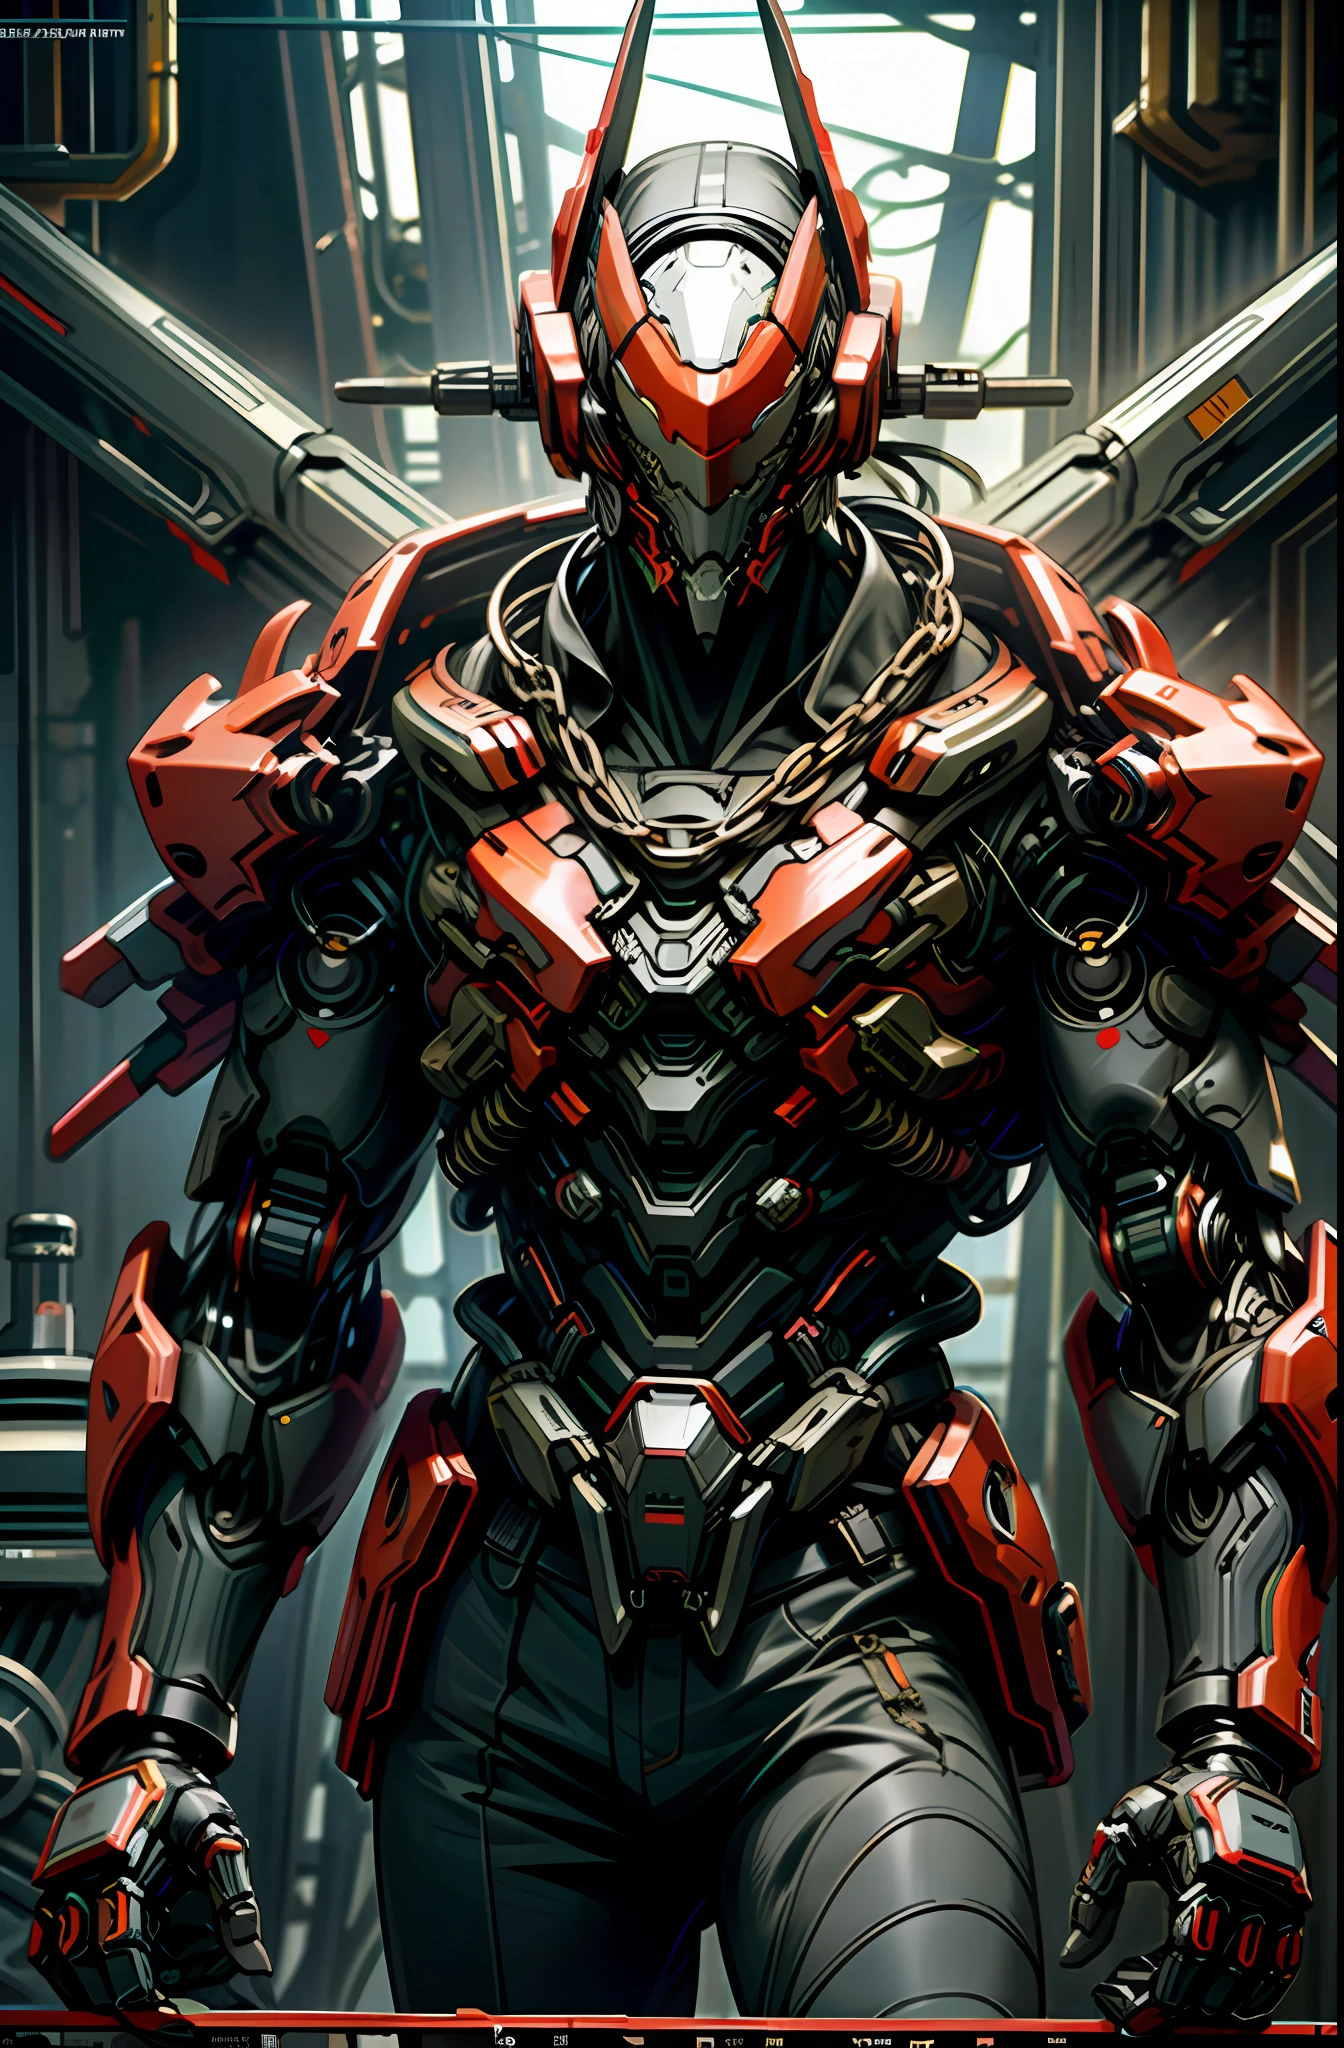 Dark_Fantasy,Cyberpunk,(chain saw,chain saw man,Red:1.1),1man,Mechanical marvel,Robotic presence,Cybernetic guardian,